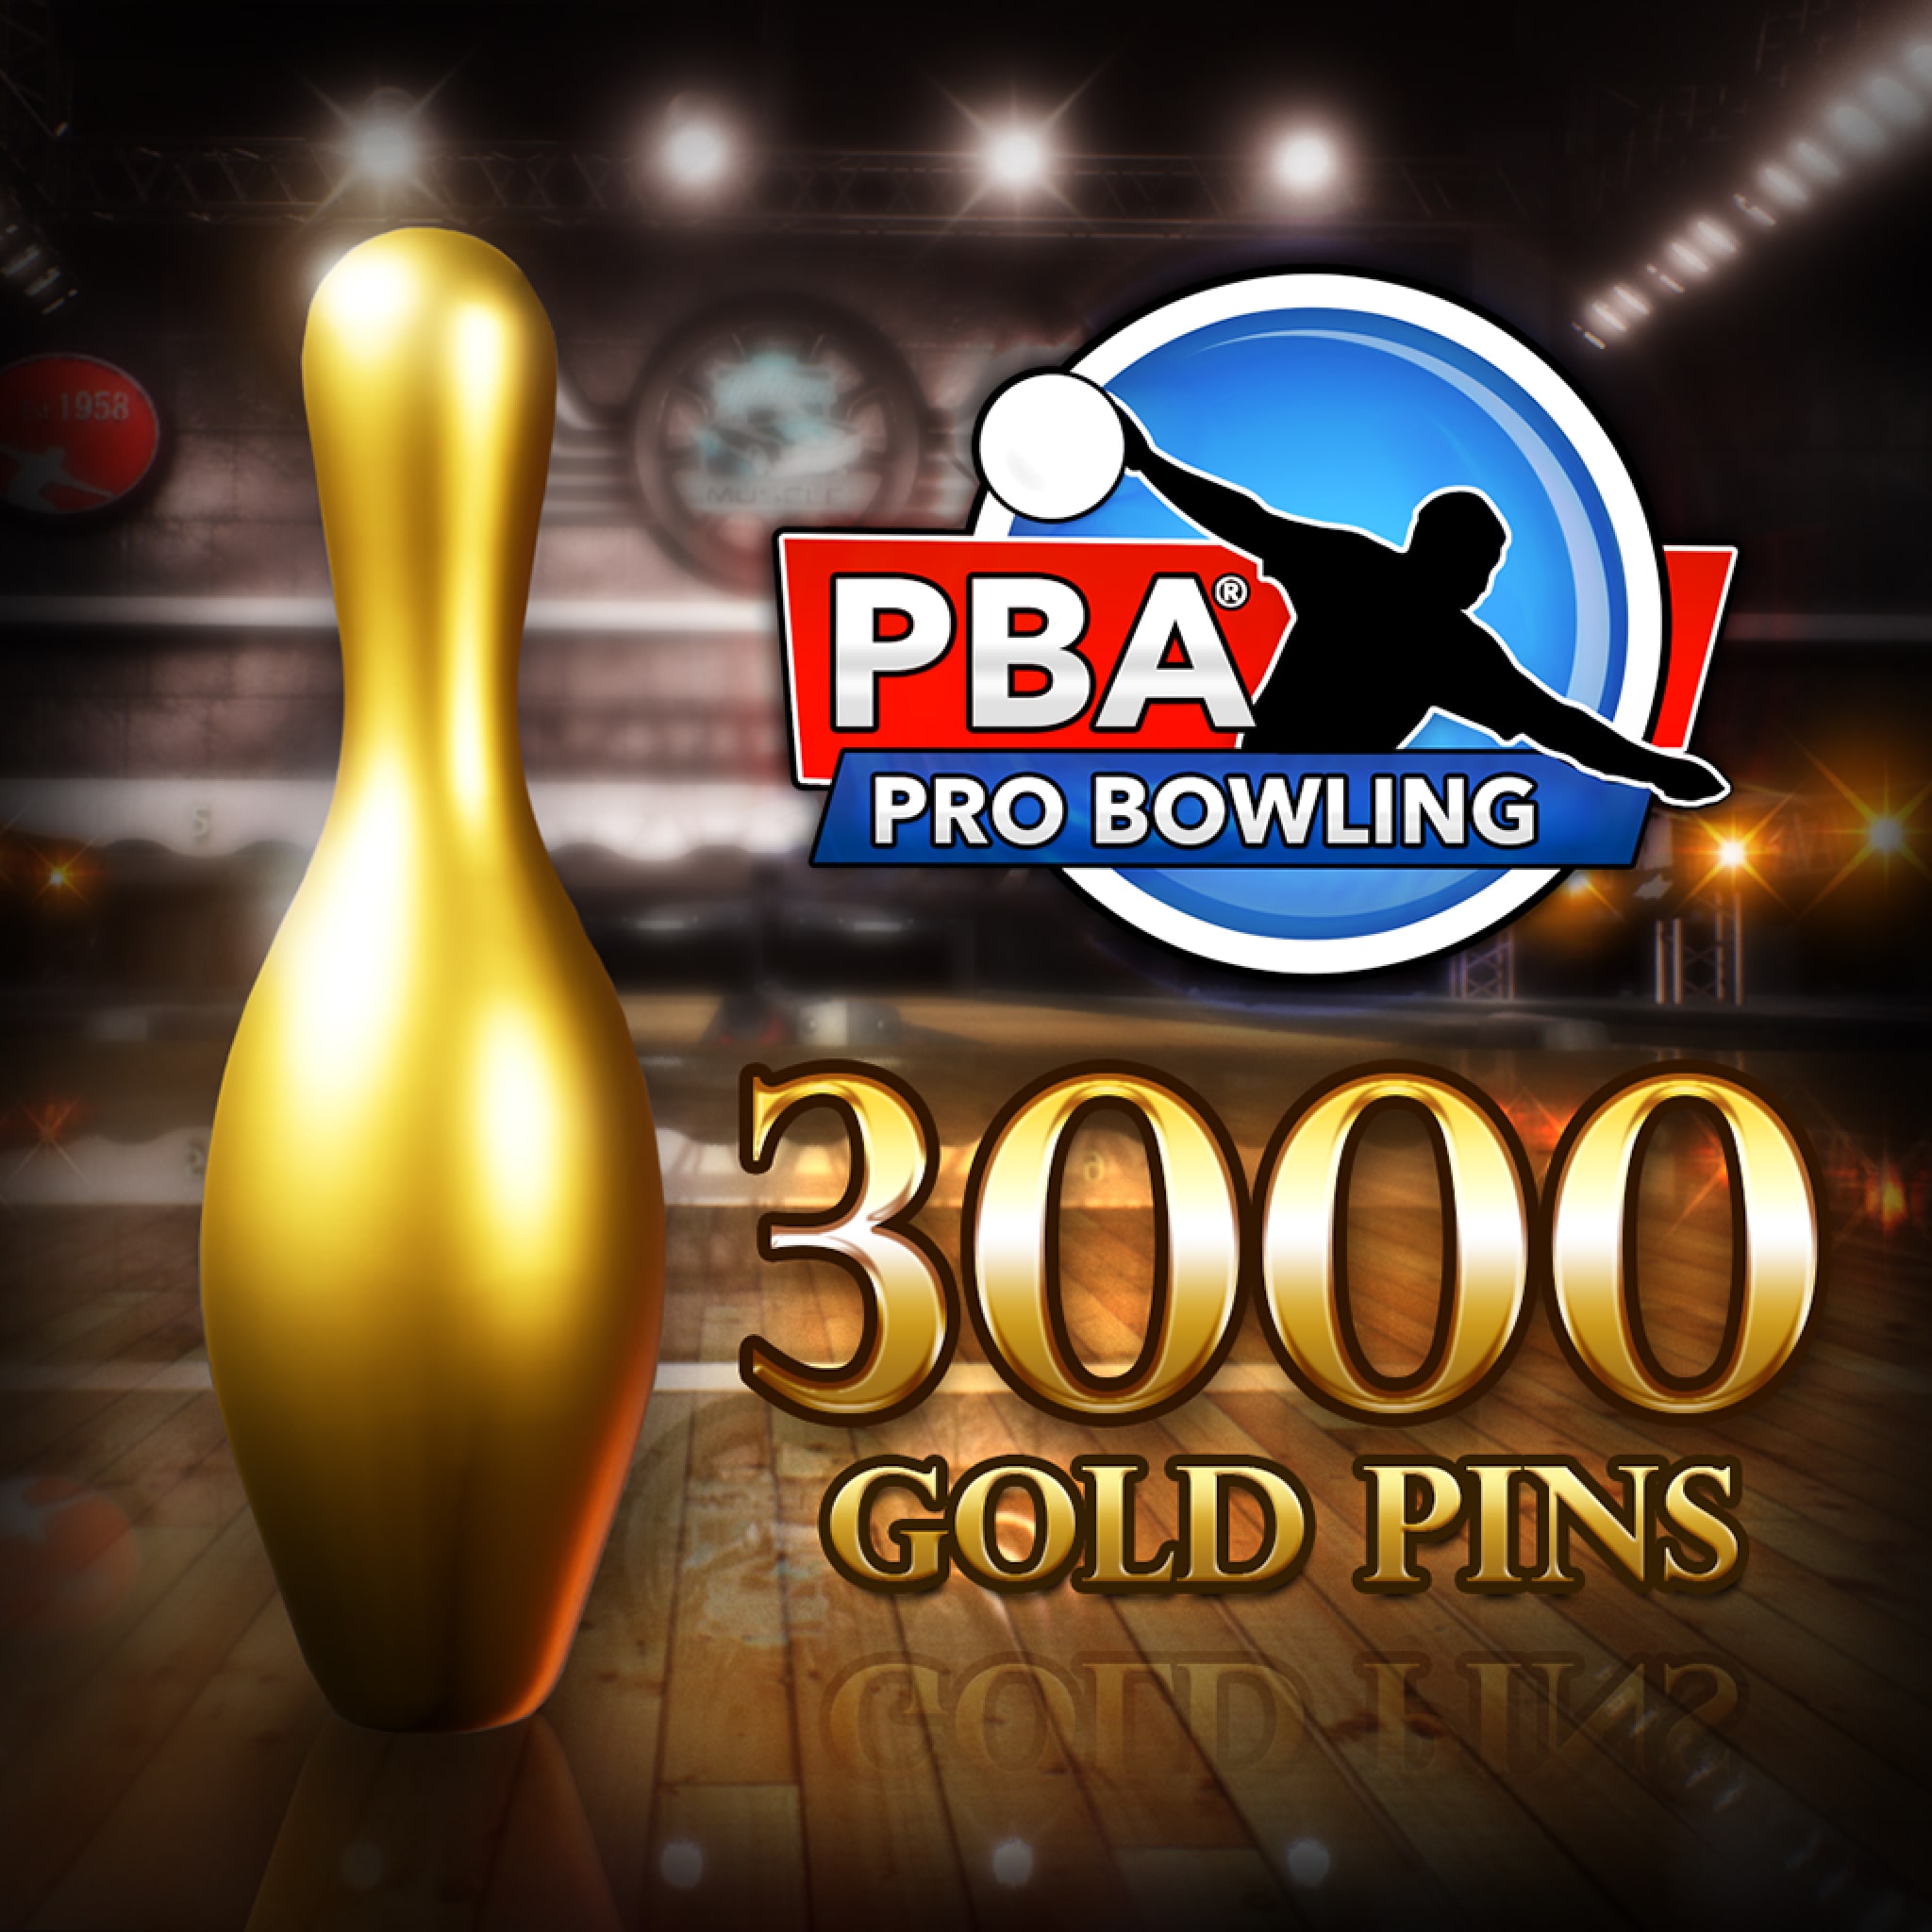 PBA Pro Bowling: 3,000 quilles d’or